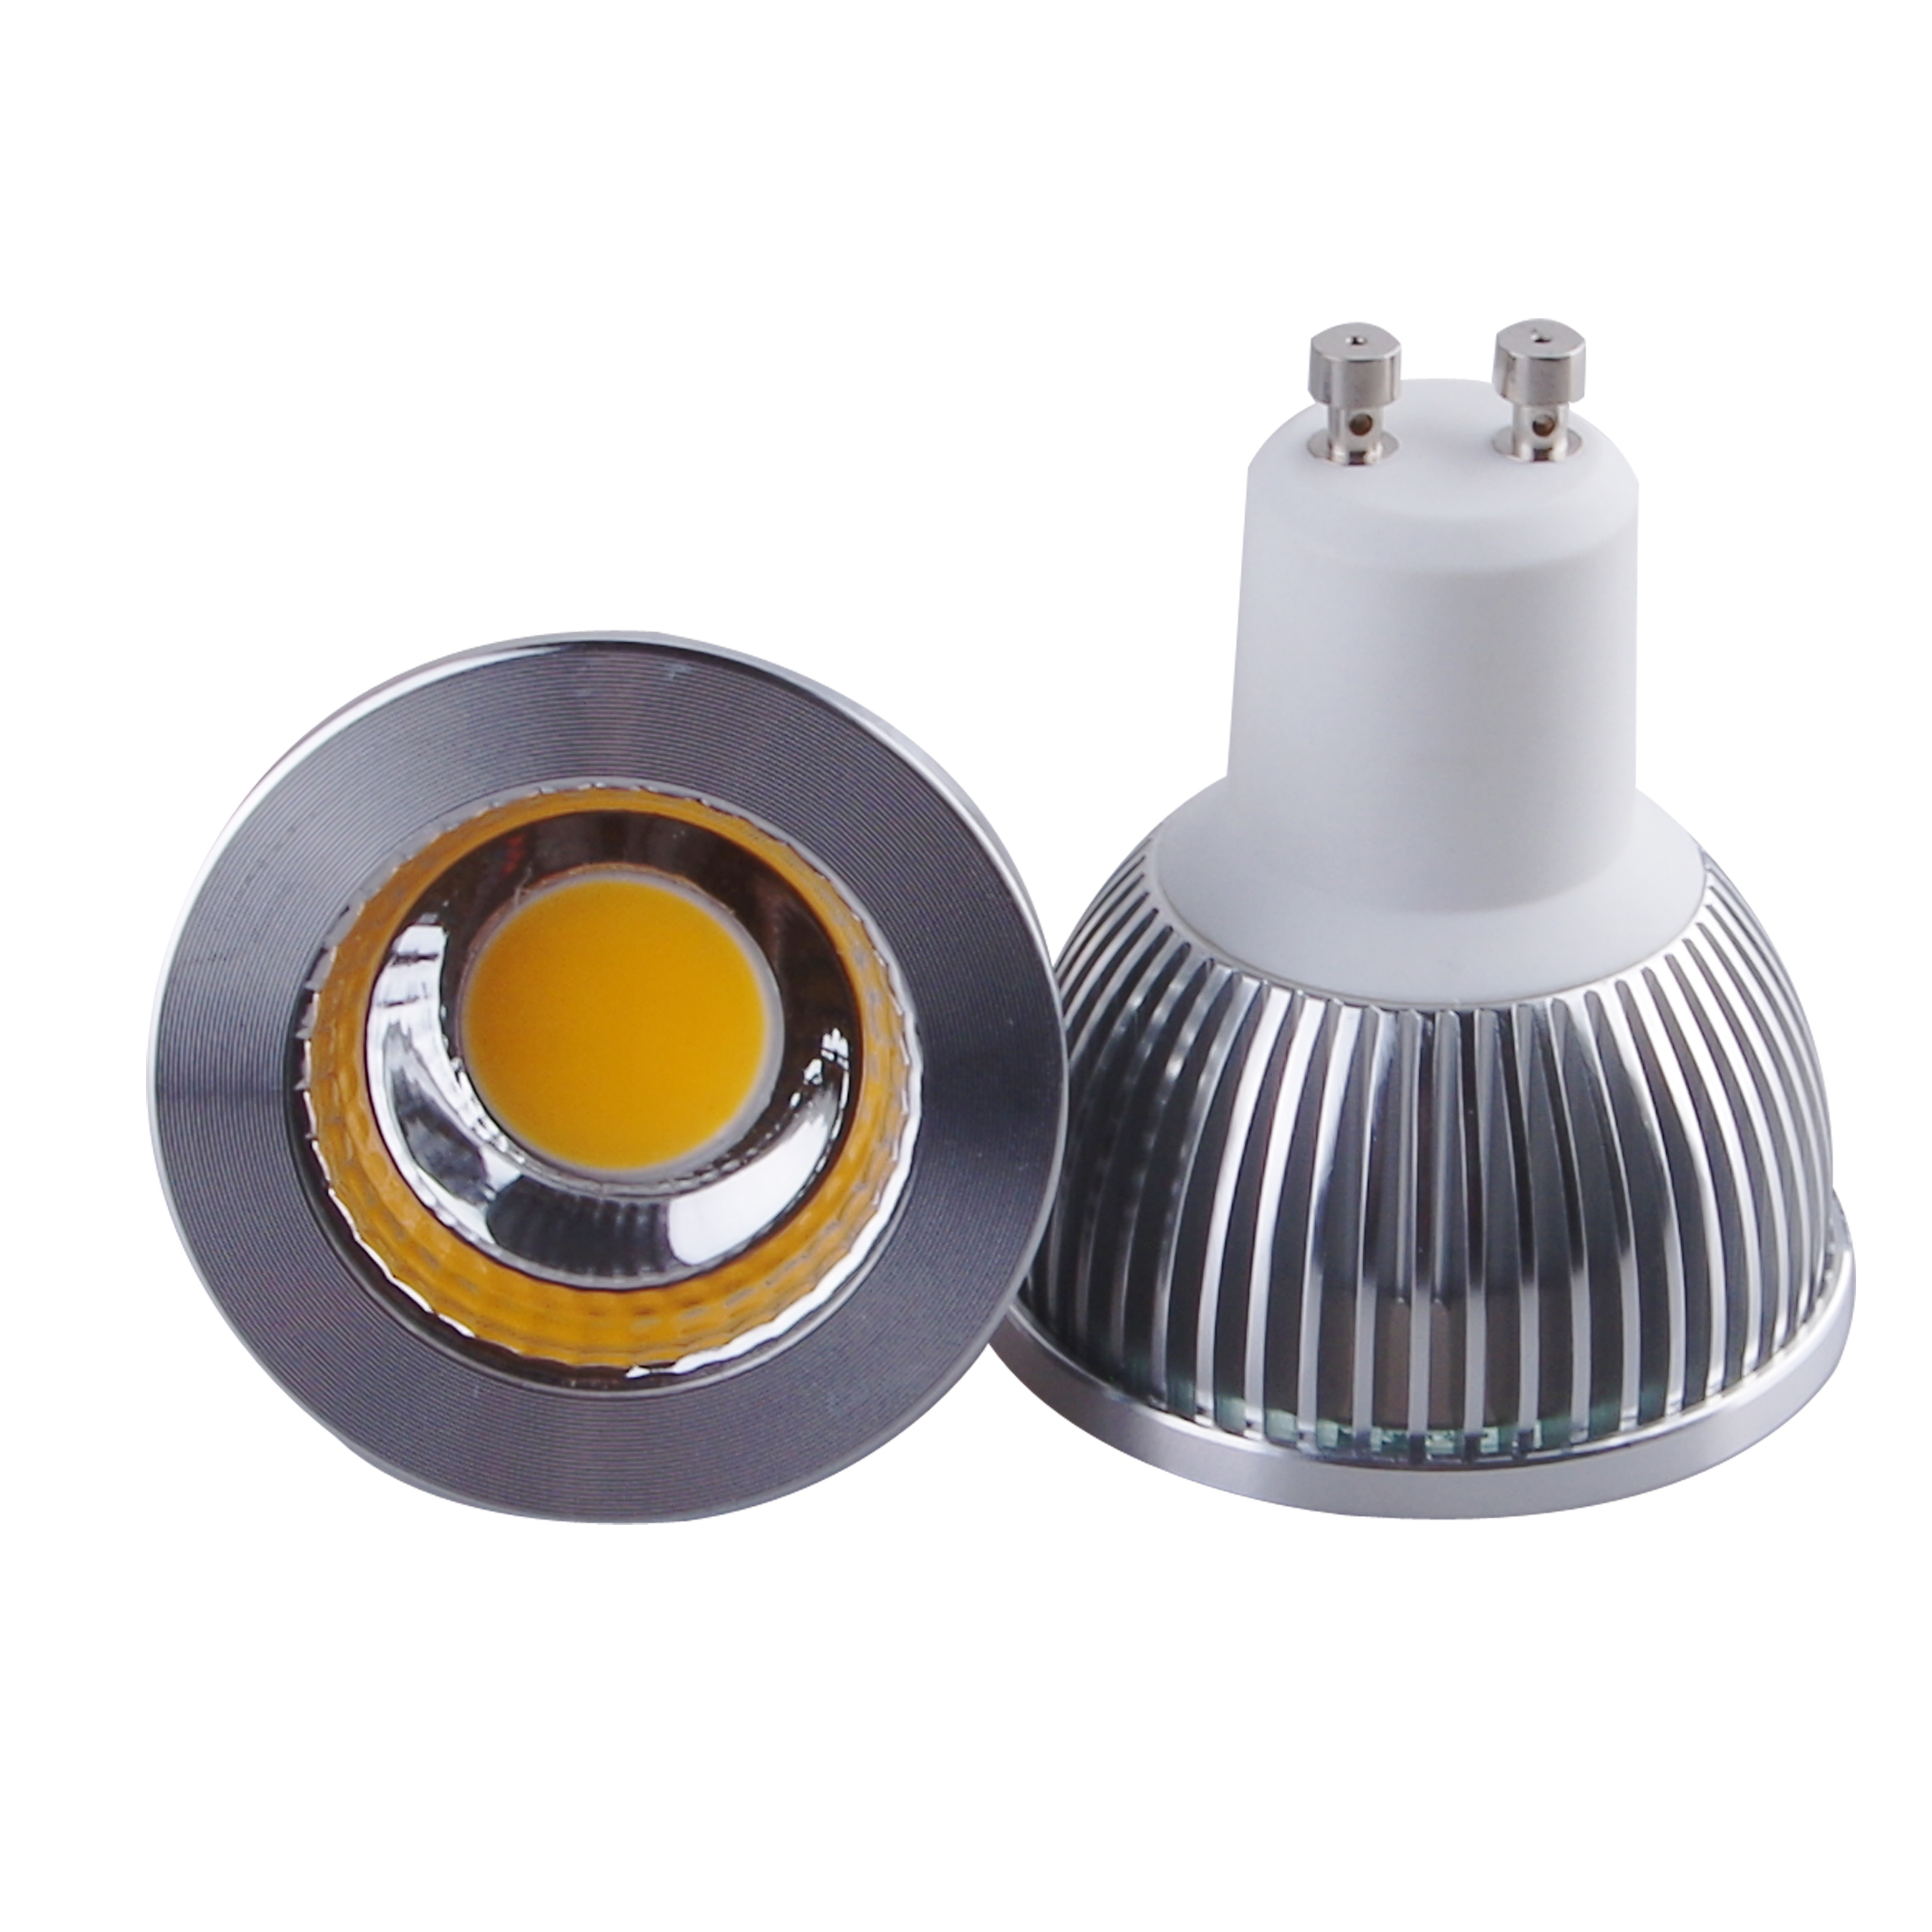 

Dimmable GU10 MR16 E27 GU5.3 cob Led Bulb Light 5W Led Spot Bulbs down lights Lamp AC85-265V 12V